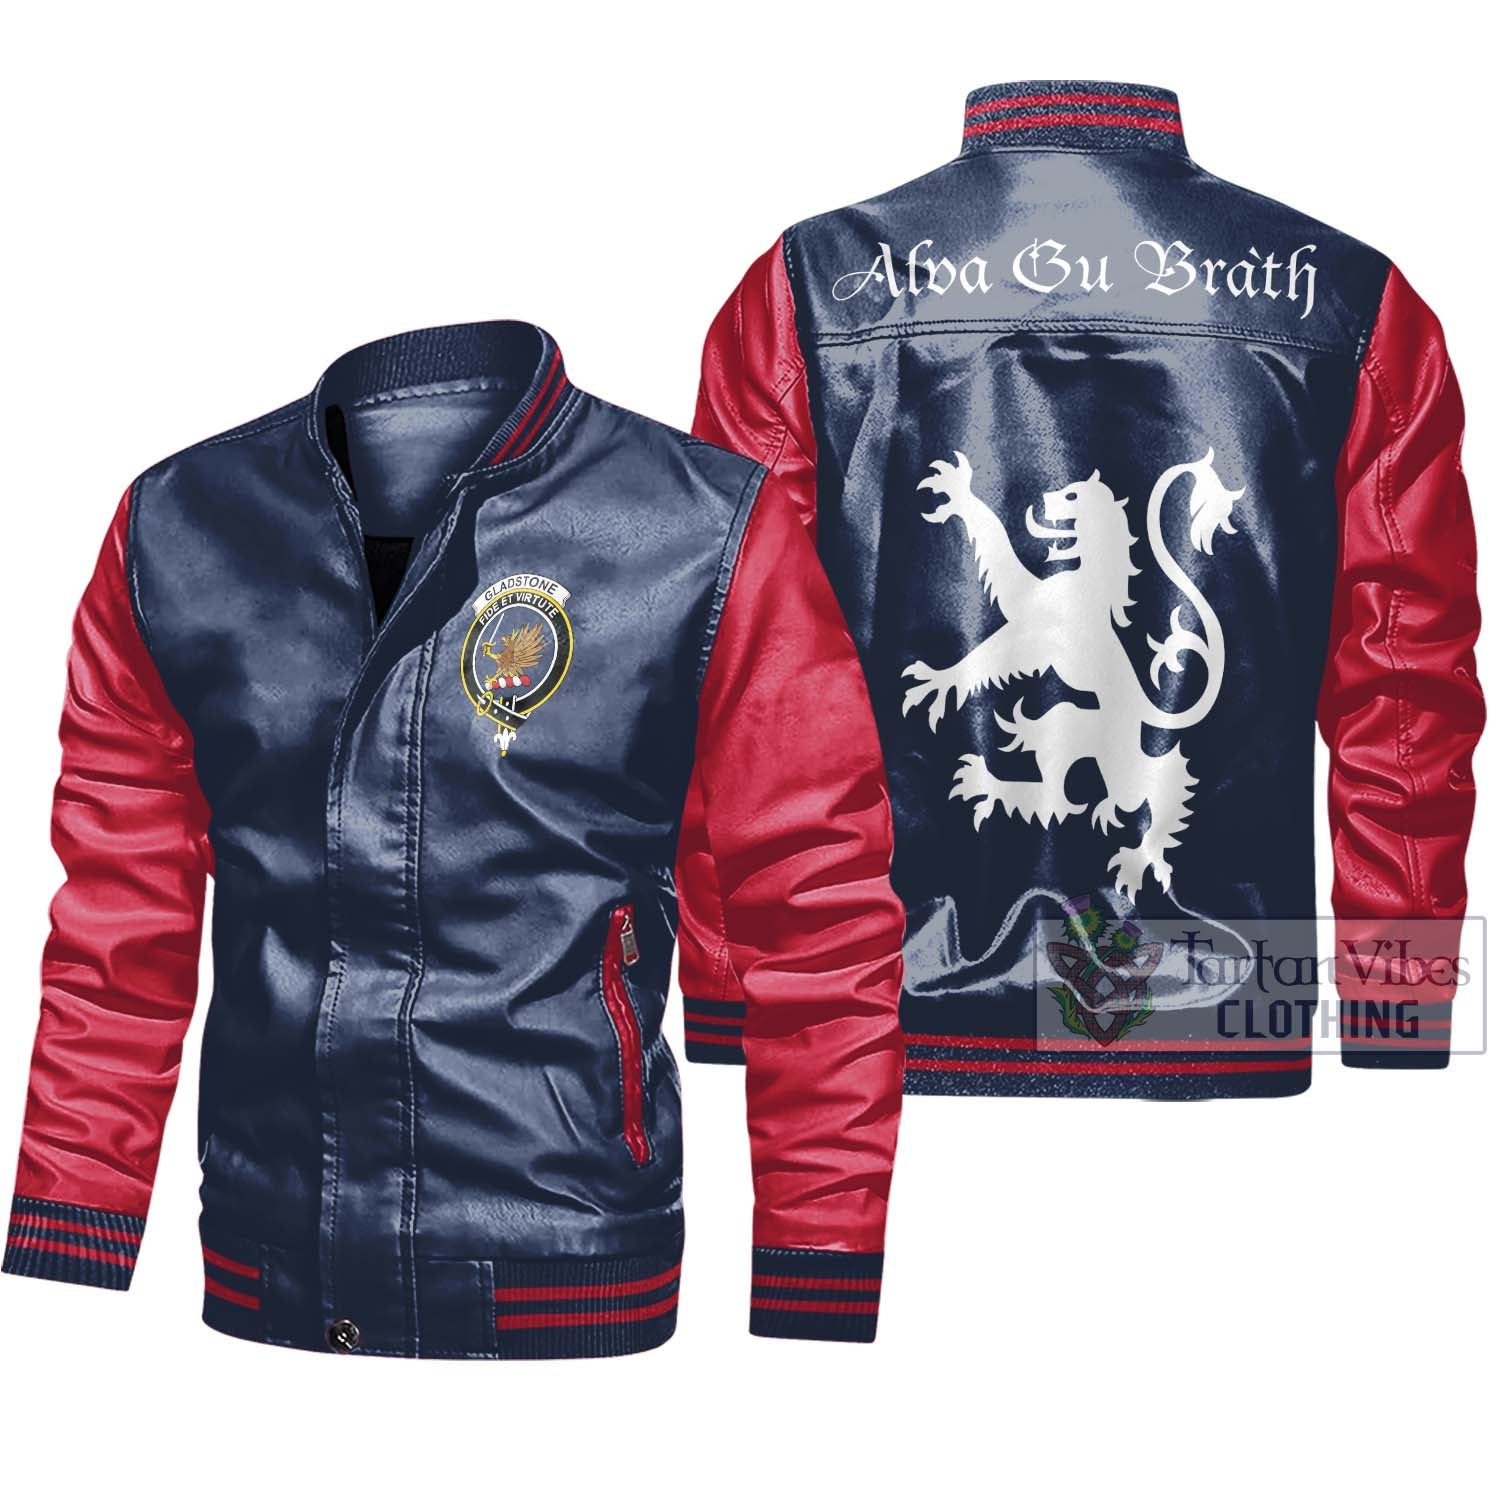 Tartan Vibes Clothing Gladstone Family Crest Leather Bomber Jacket Lion Rampant Alba Gu Brath Style